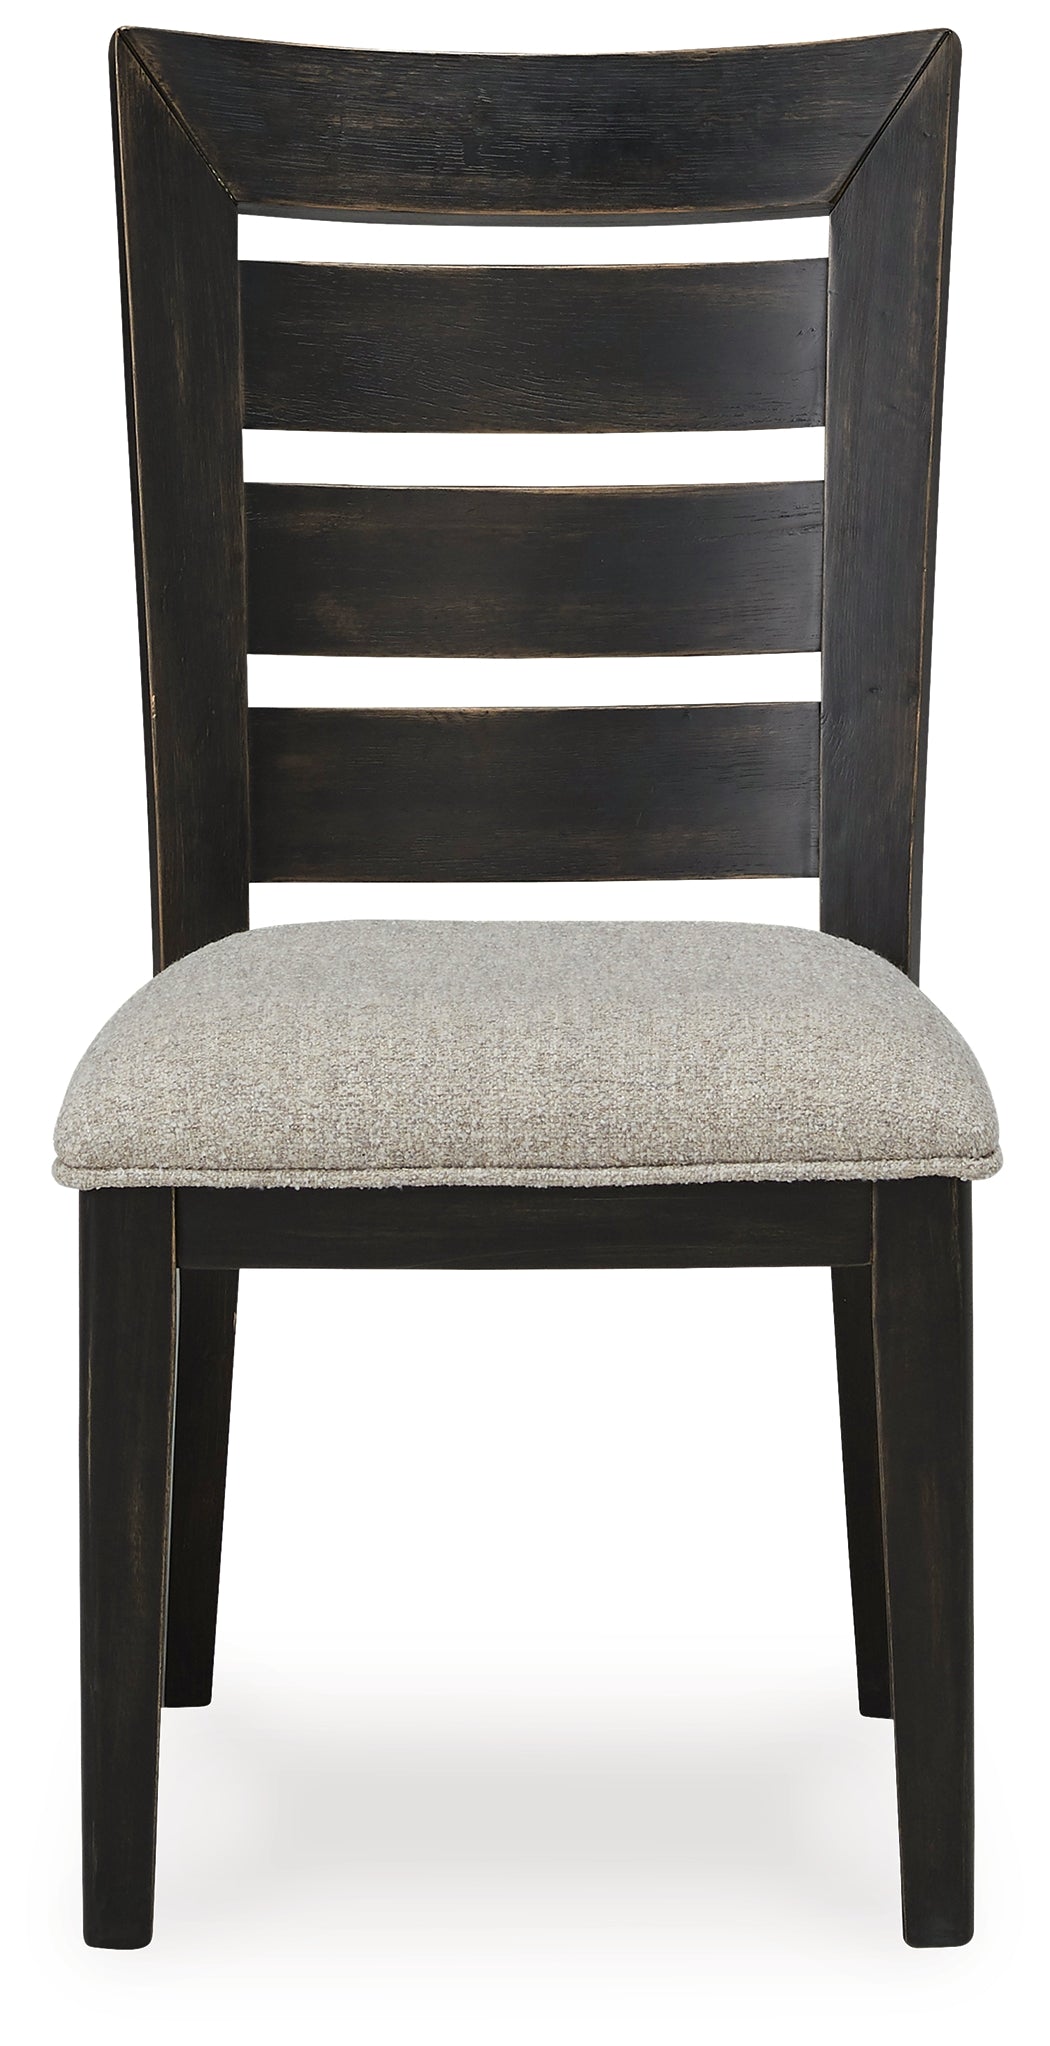 Galliden Black Dining Chair, Set of 2 - D841-03 - Luna Furniture